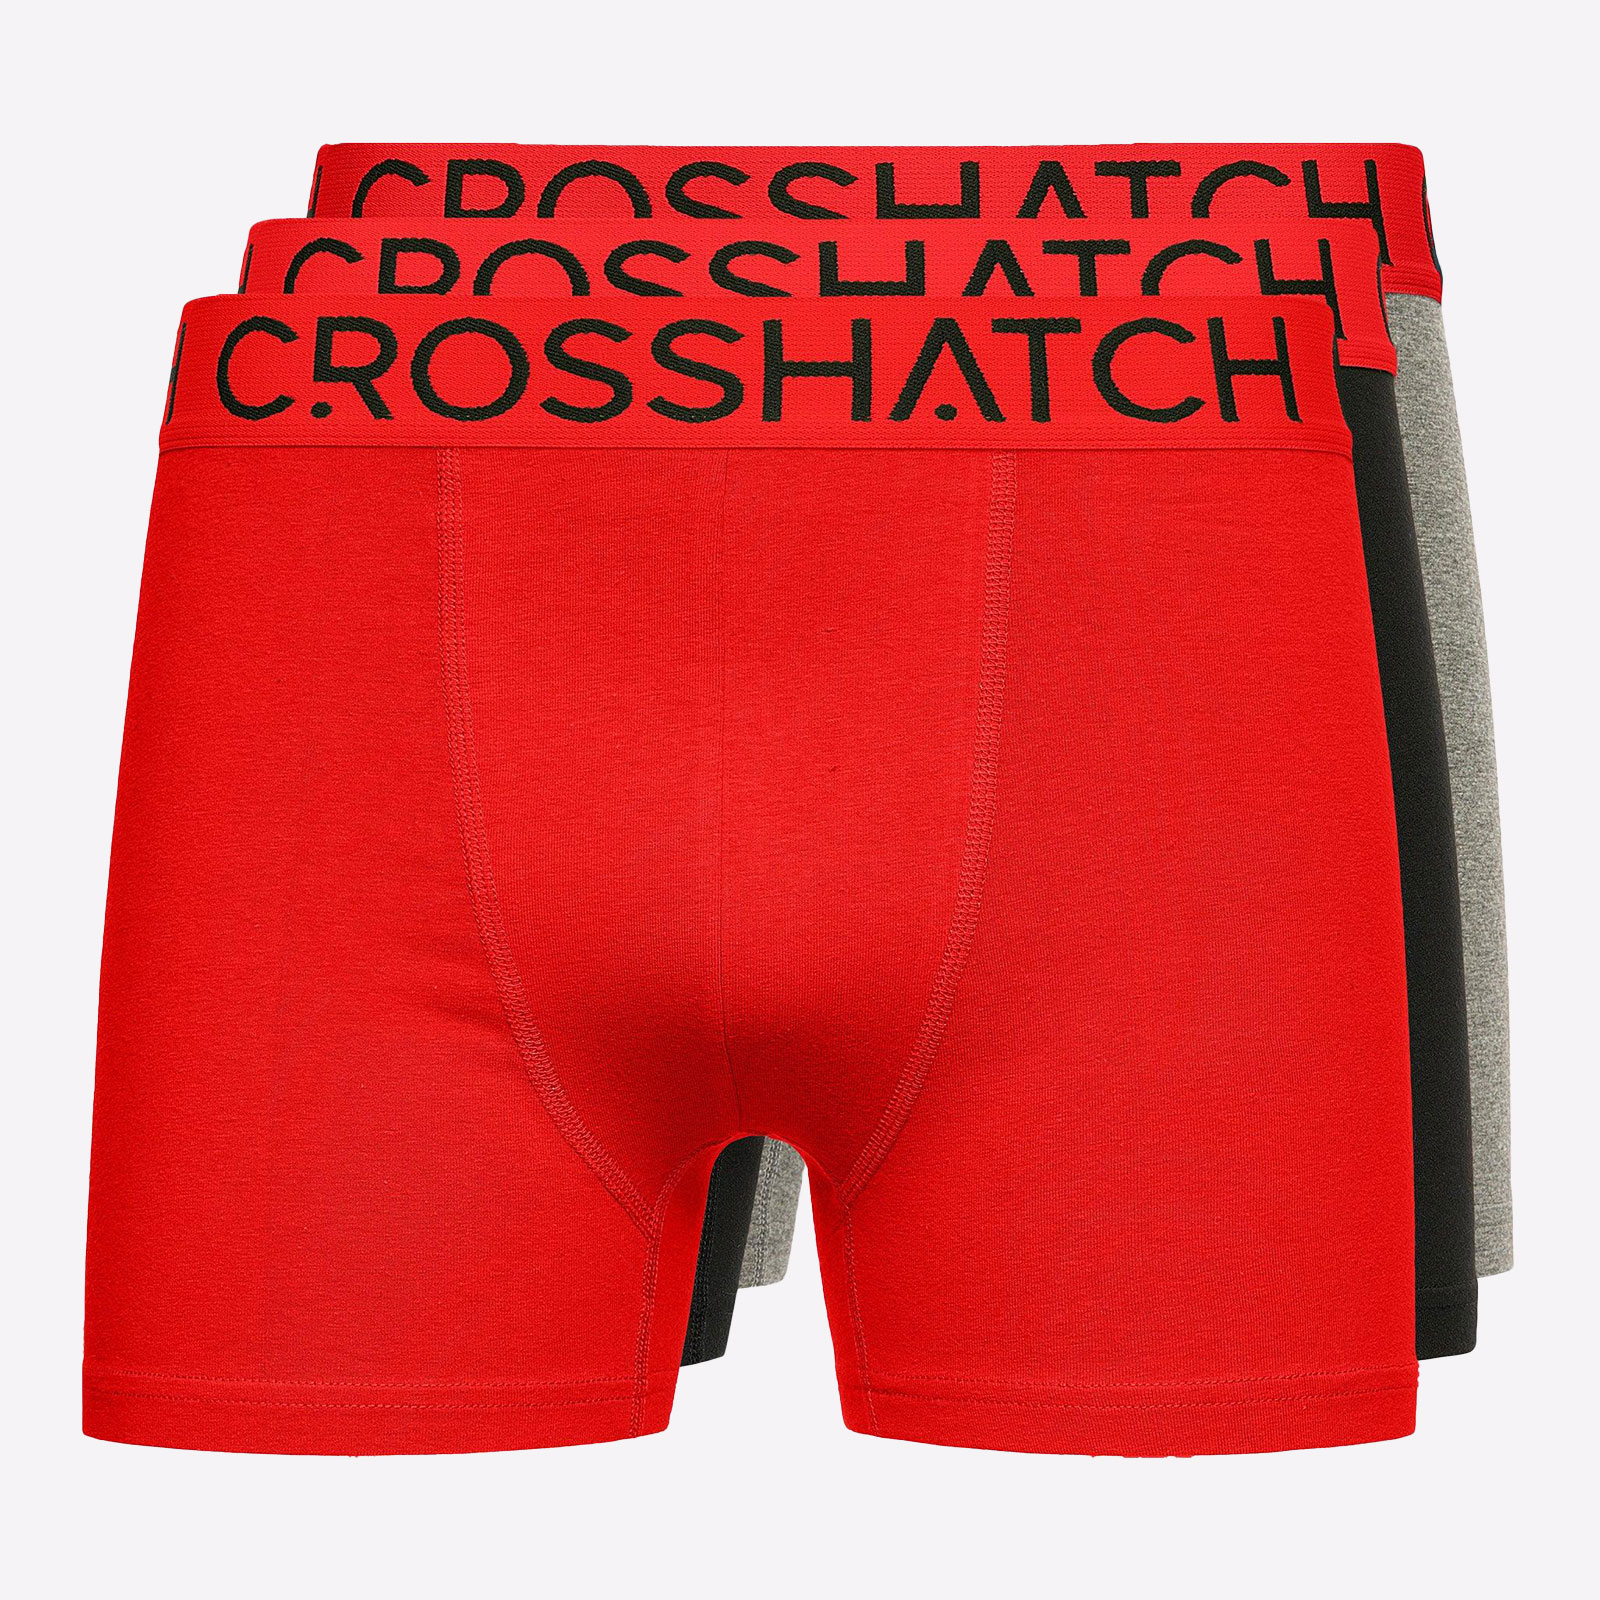 Crosshatch Knightling Boxer Shorts Mens (3 Pack) - BTM-2664